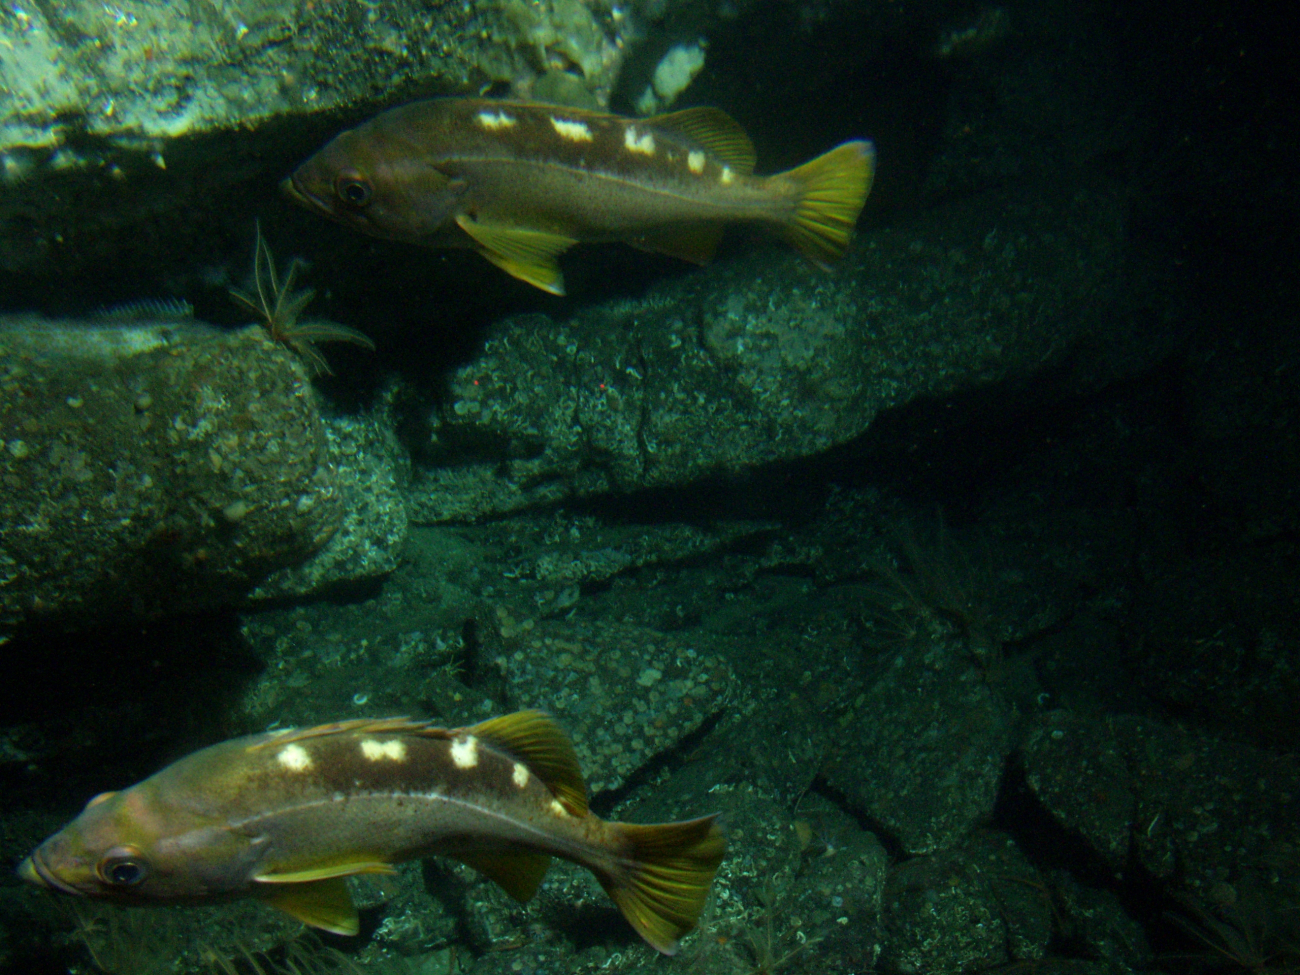 Yellowtail rockfish (Sebastes flavidus) close up on rocky reef habitatat 116 meters depth